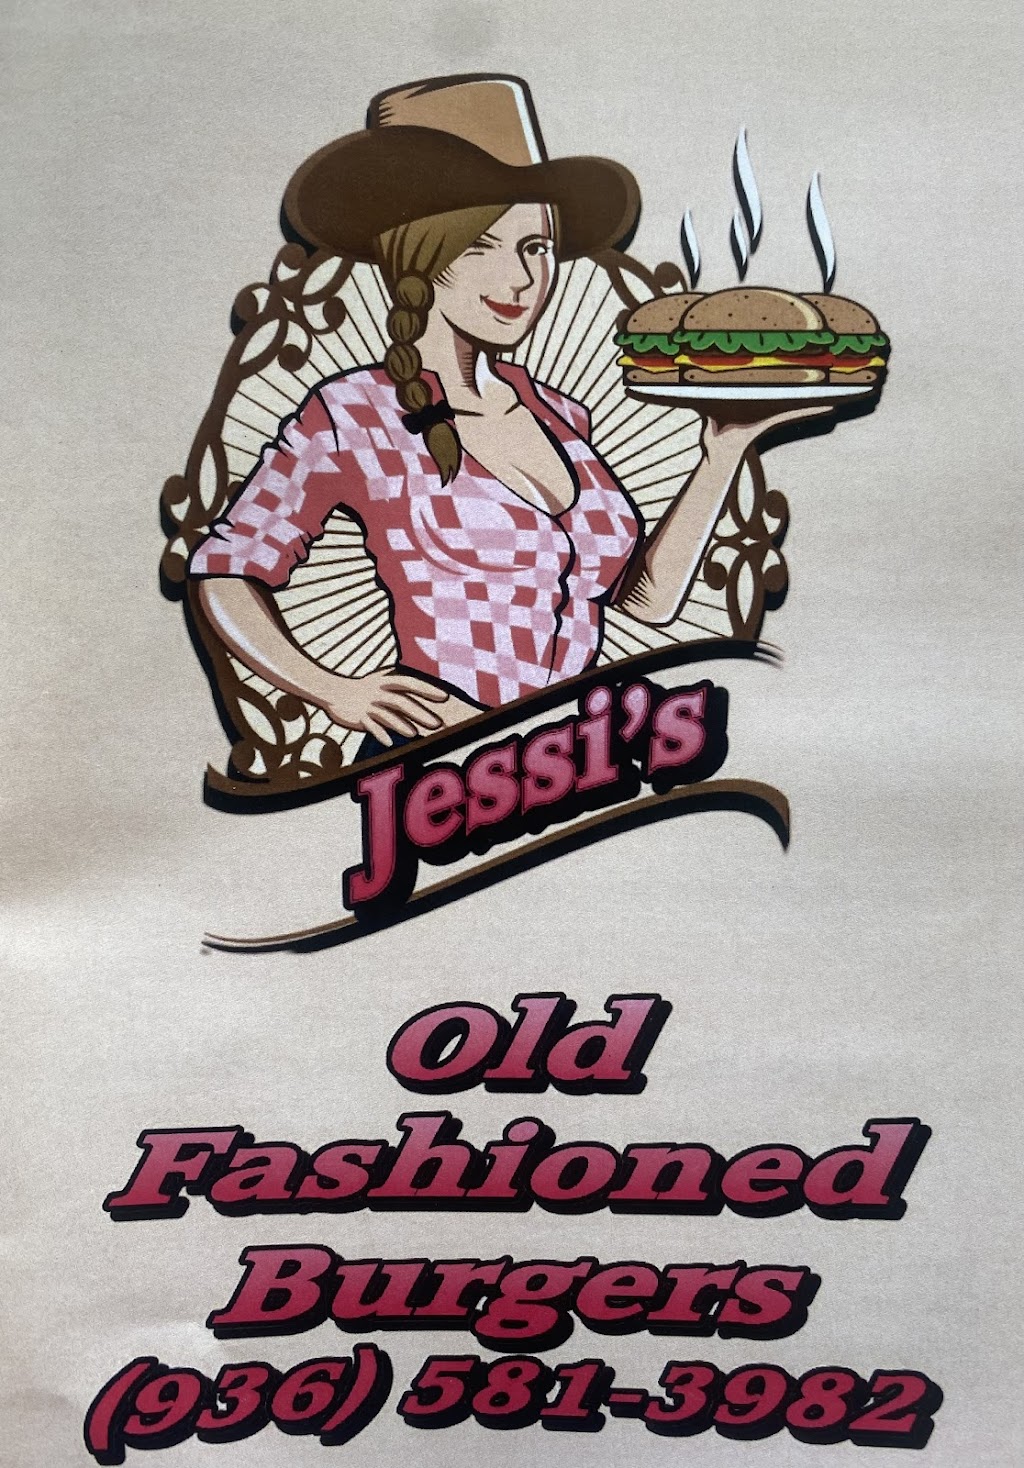 Jessi’s old fashioned burgers | restaurant | 3685 TX-19, Huntsville, TX 77320, USA | 9365813982 OR +1 936-581-3982